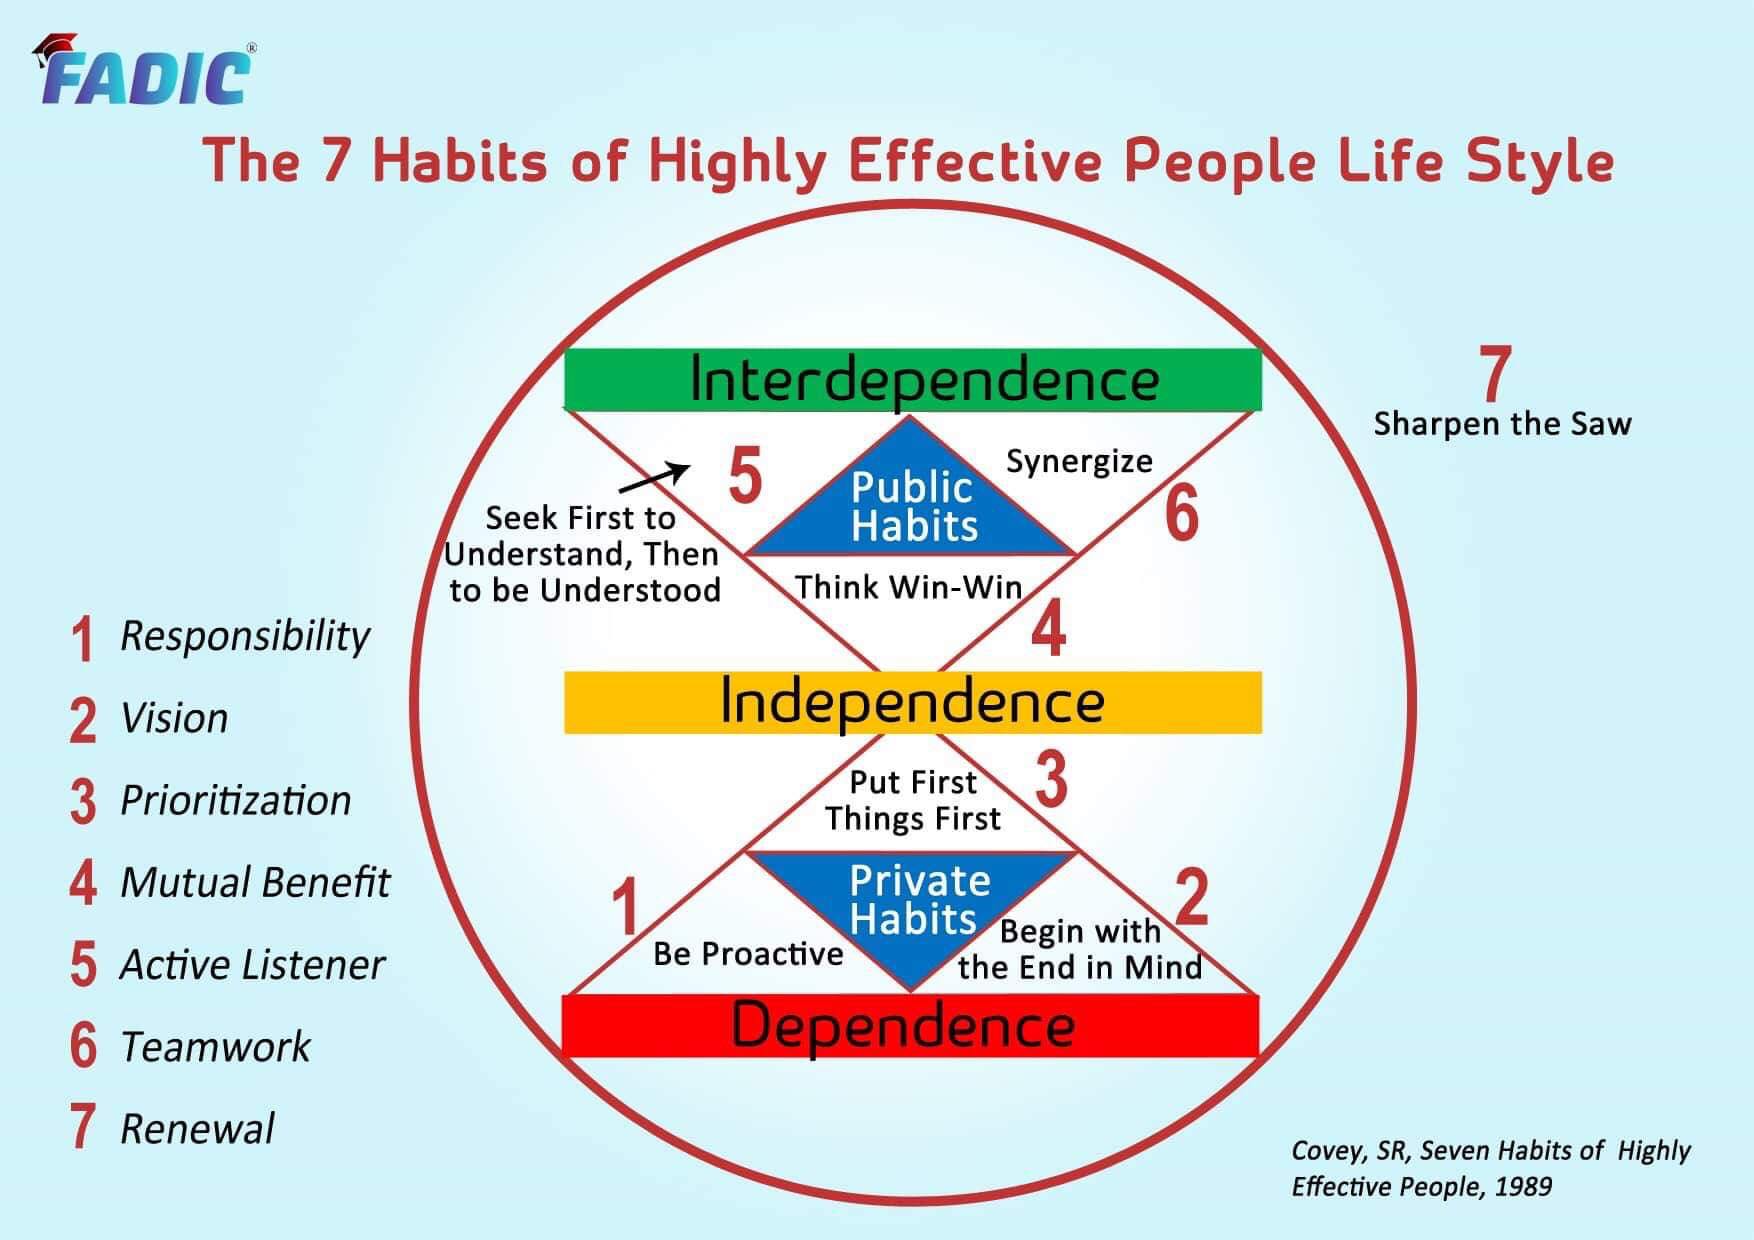 the 7 habits